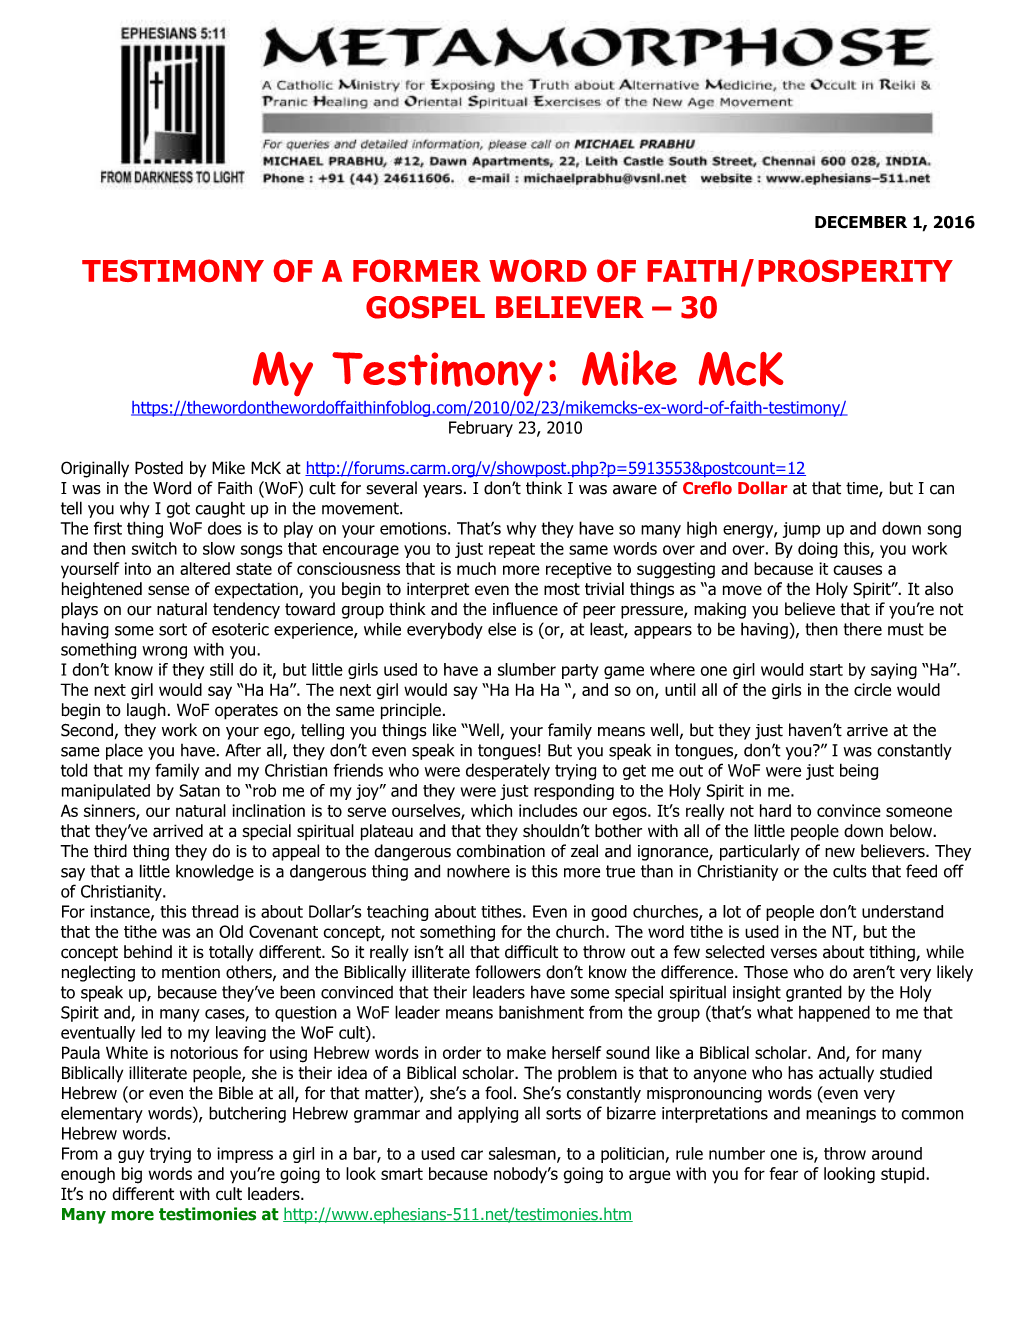 Testimony of a Former Word of Faith/Prosperity Gospel Believer 30